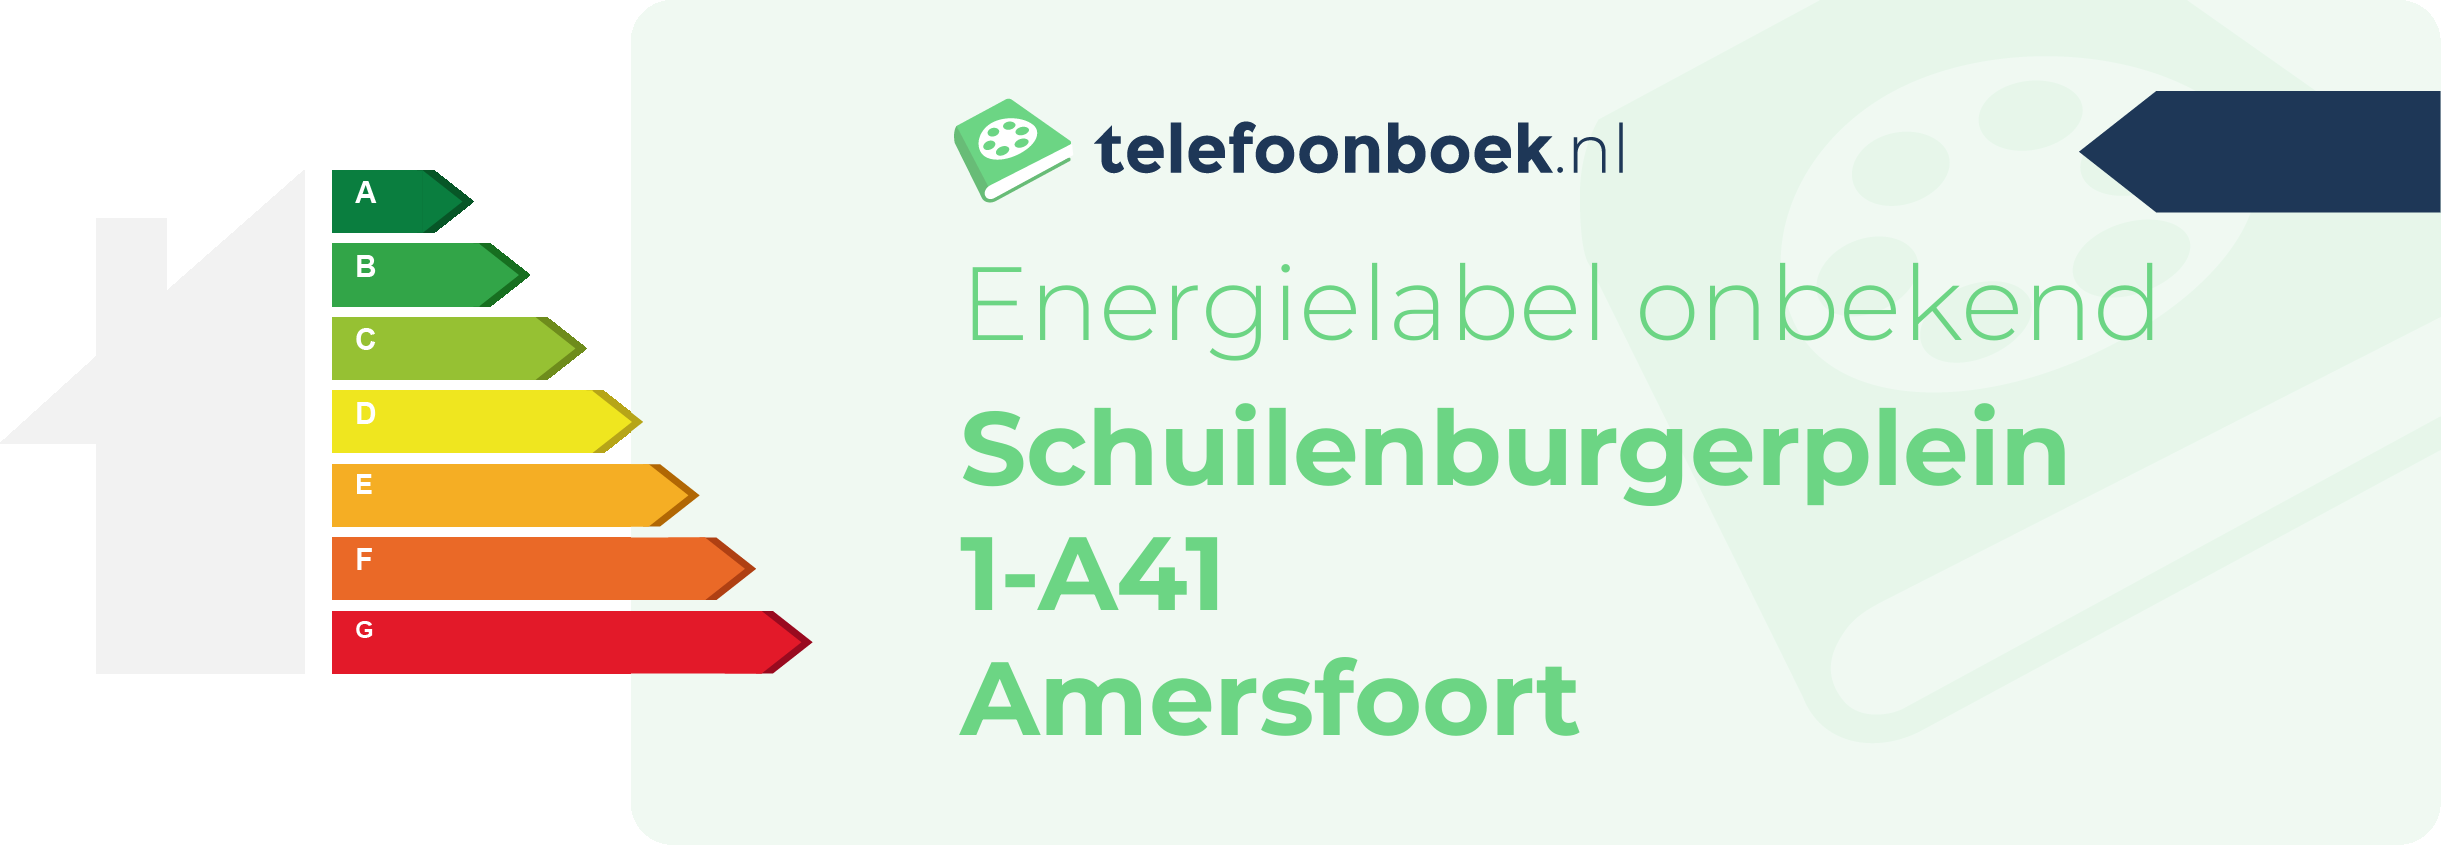 Energielabel Schuilenburgerplein 1-A41 Amersfoort